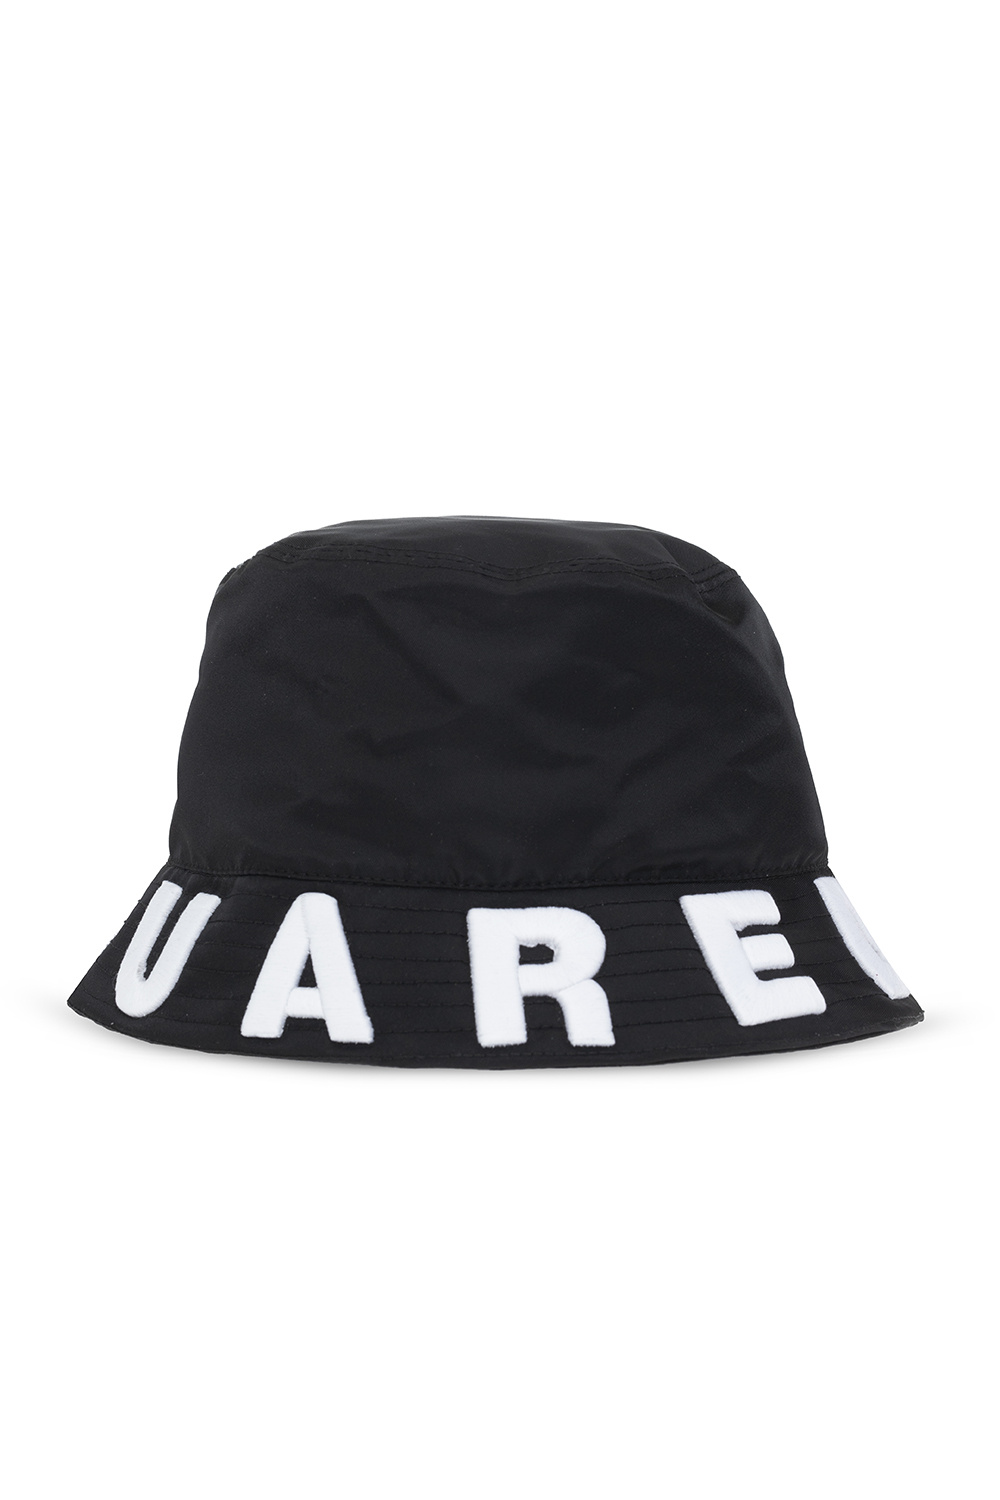 Dsquared2 Bucket hat with logo | Men's Accessories | Vitkac